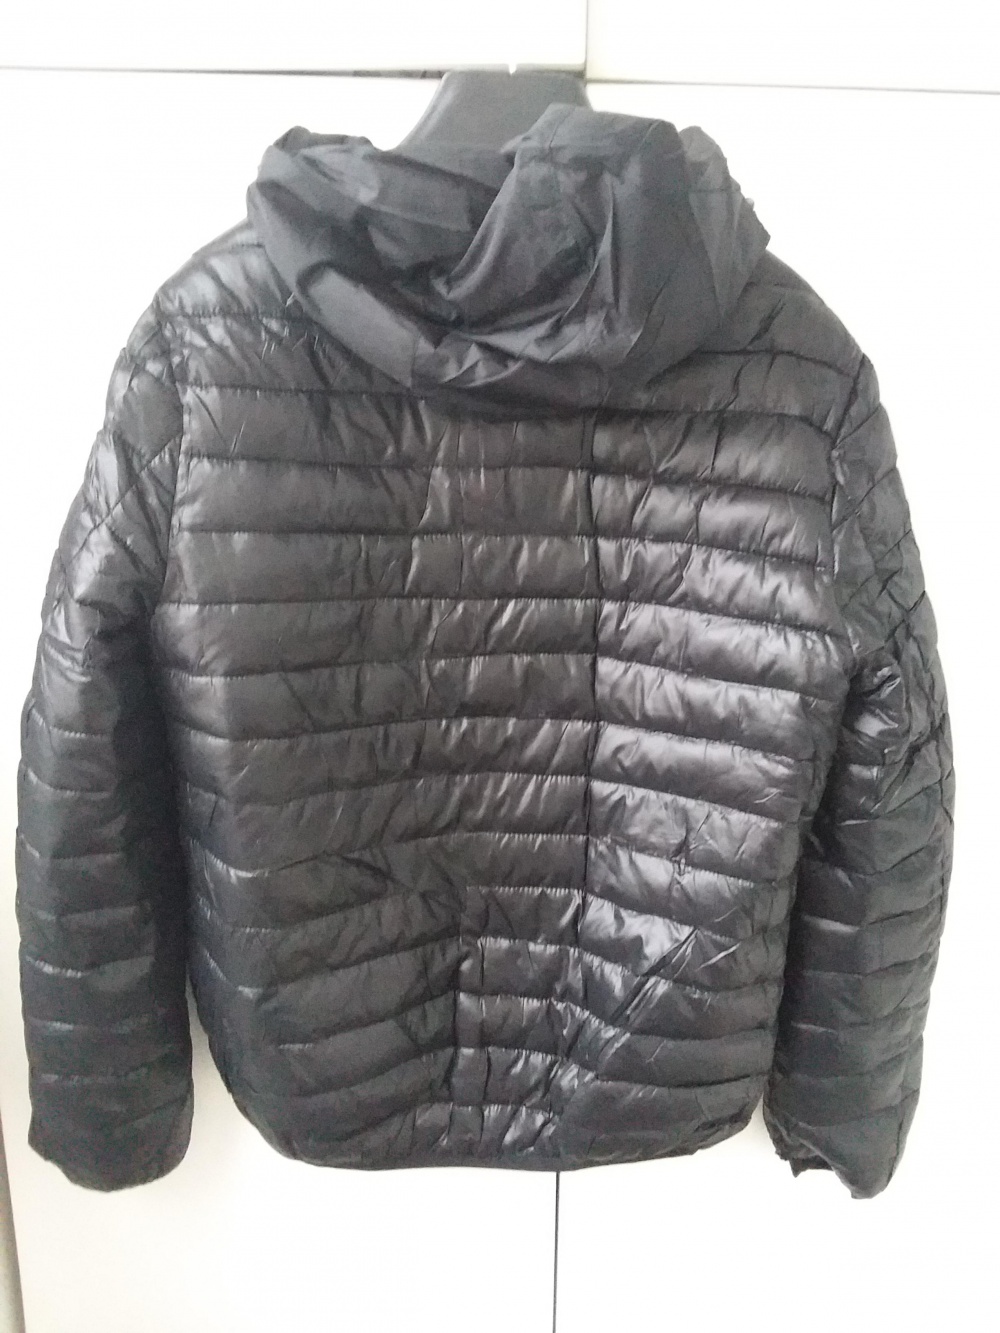 Женская двусторонняя куртка Z-Design  на 46-48 размер